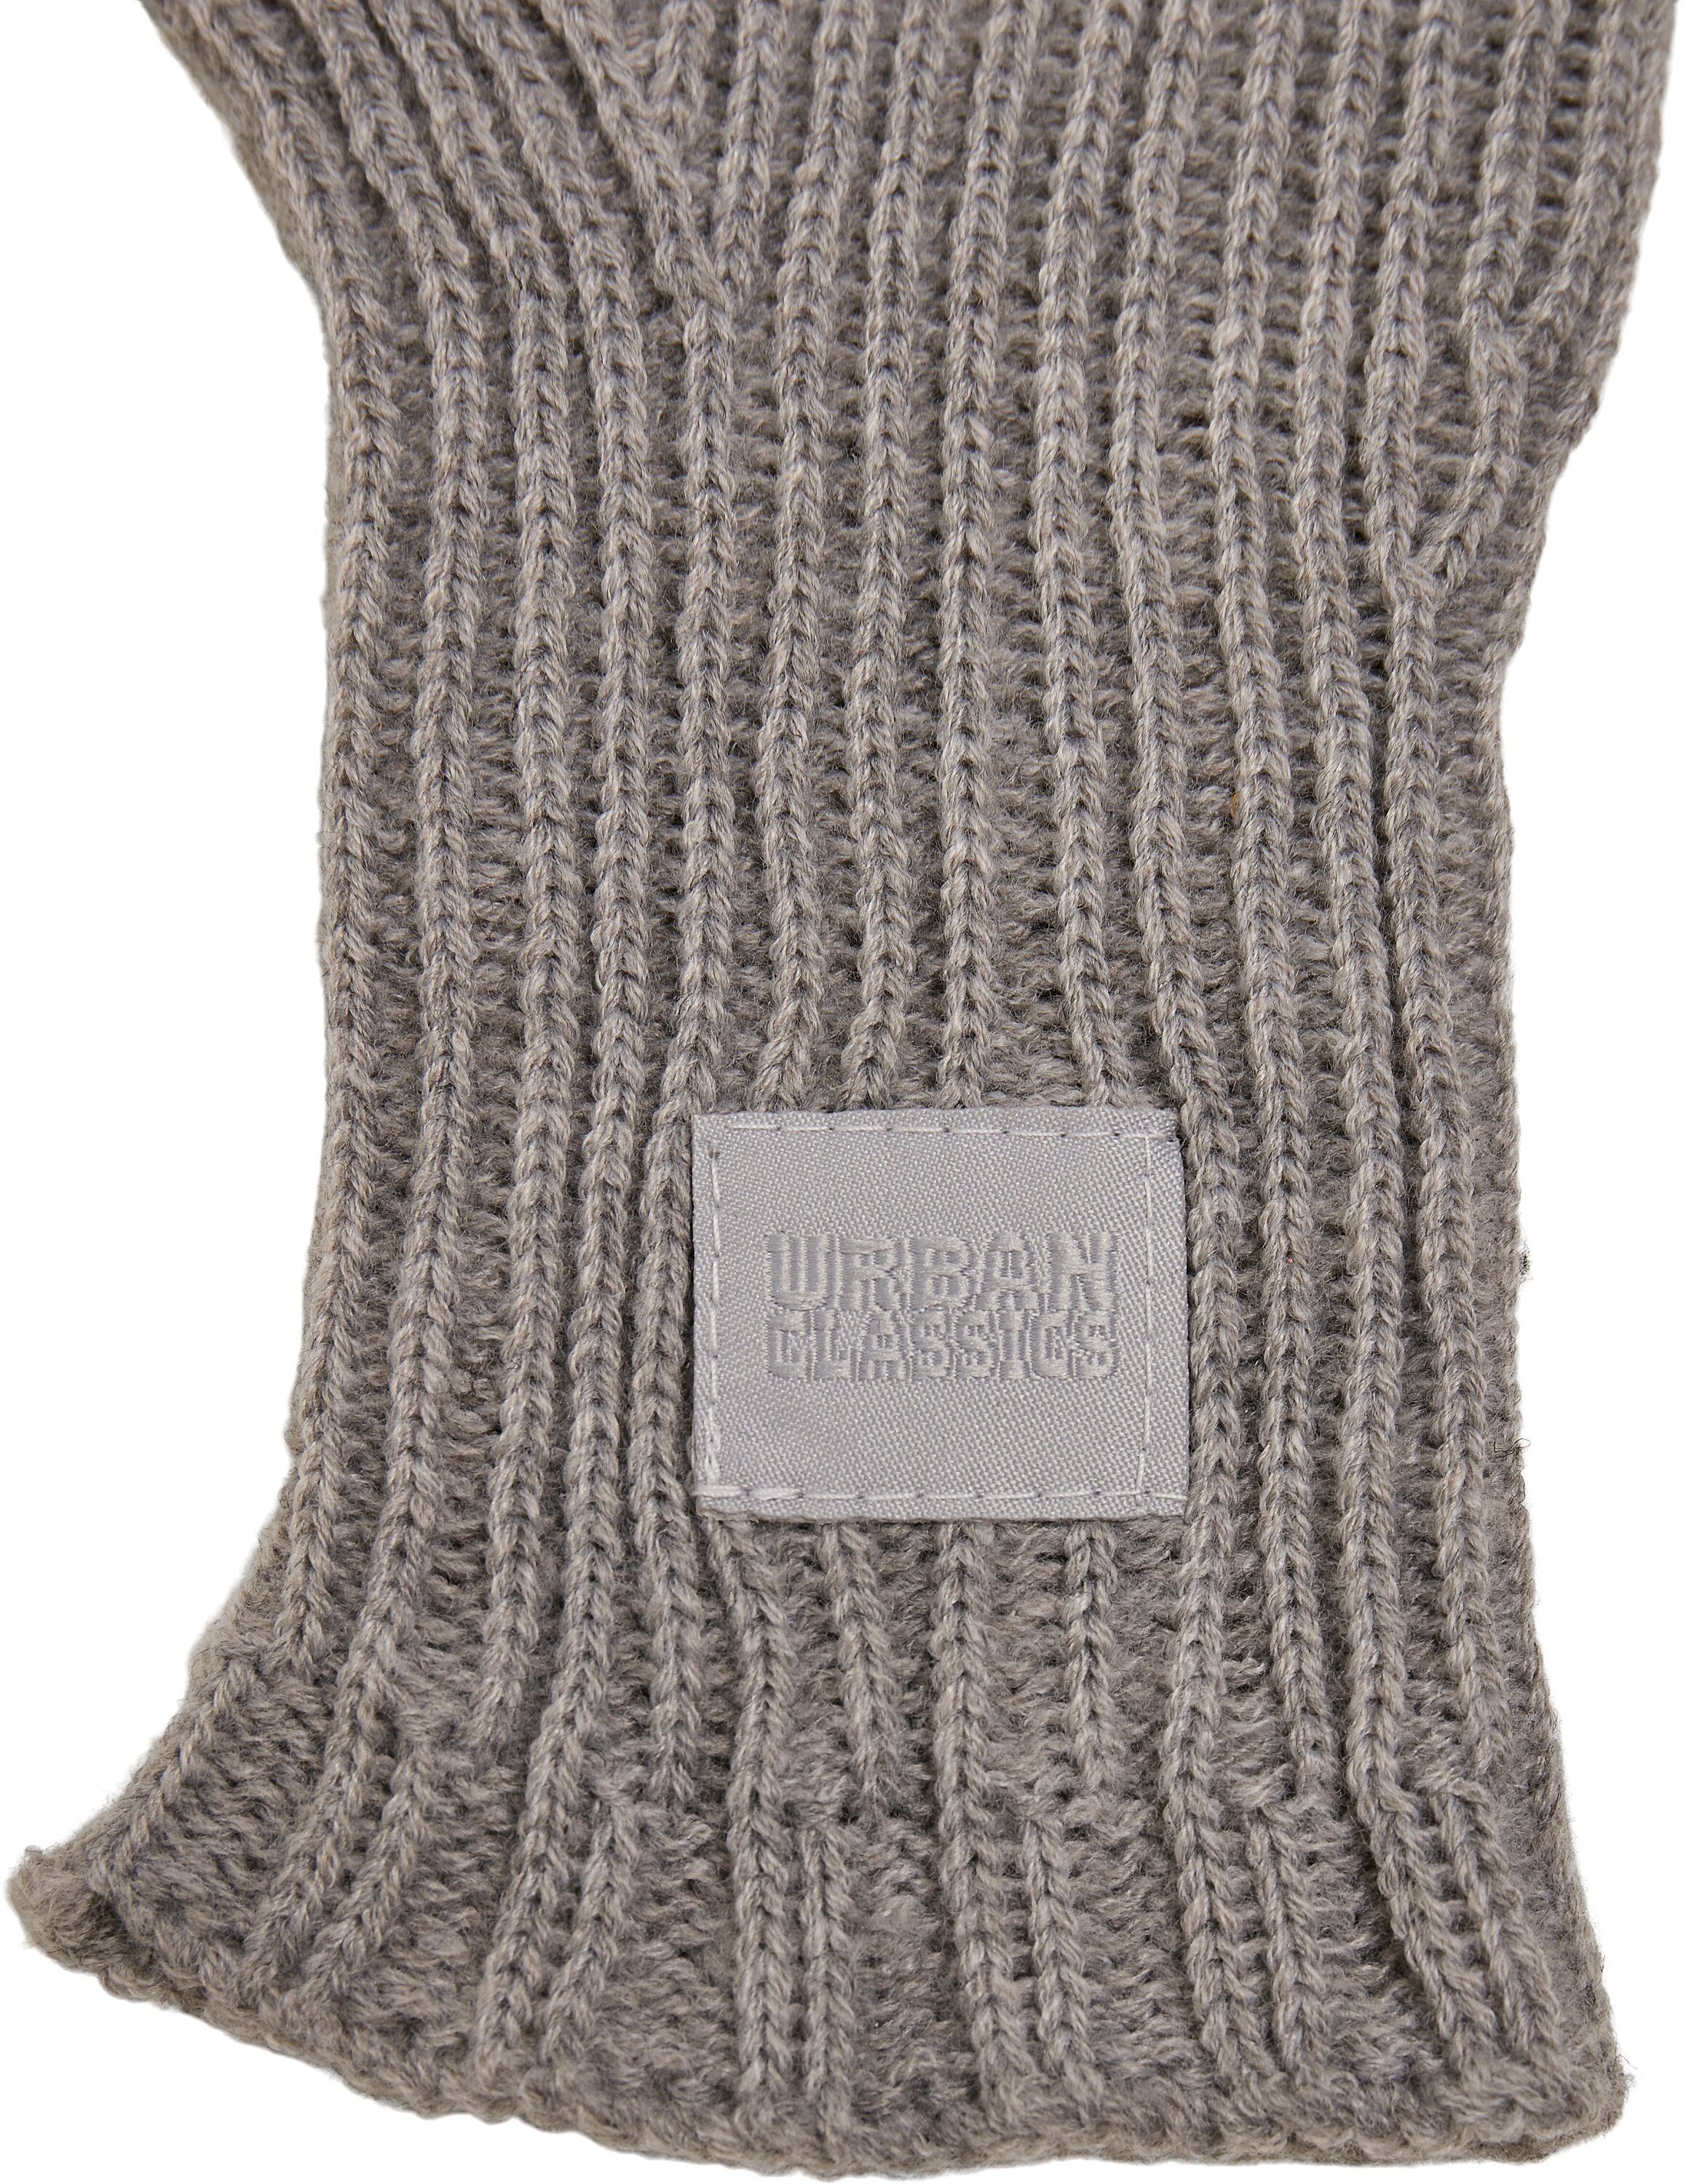 URBAN CLASSICS Baumwollhandschuhe Mix Smart Gloves Knitted Unisex Wool heathergrey